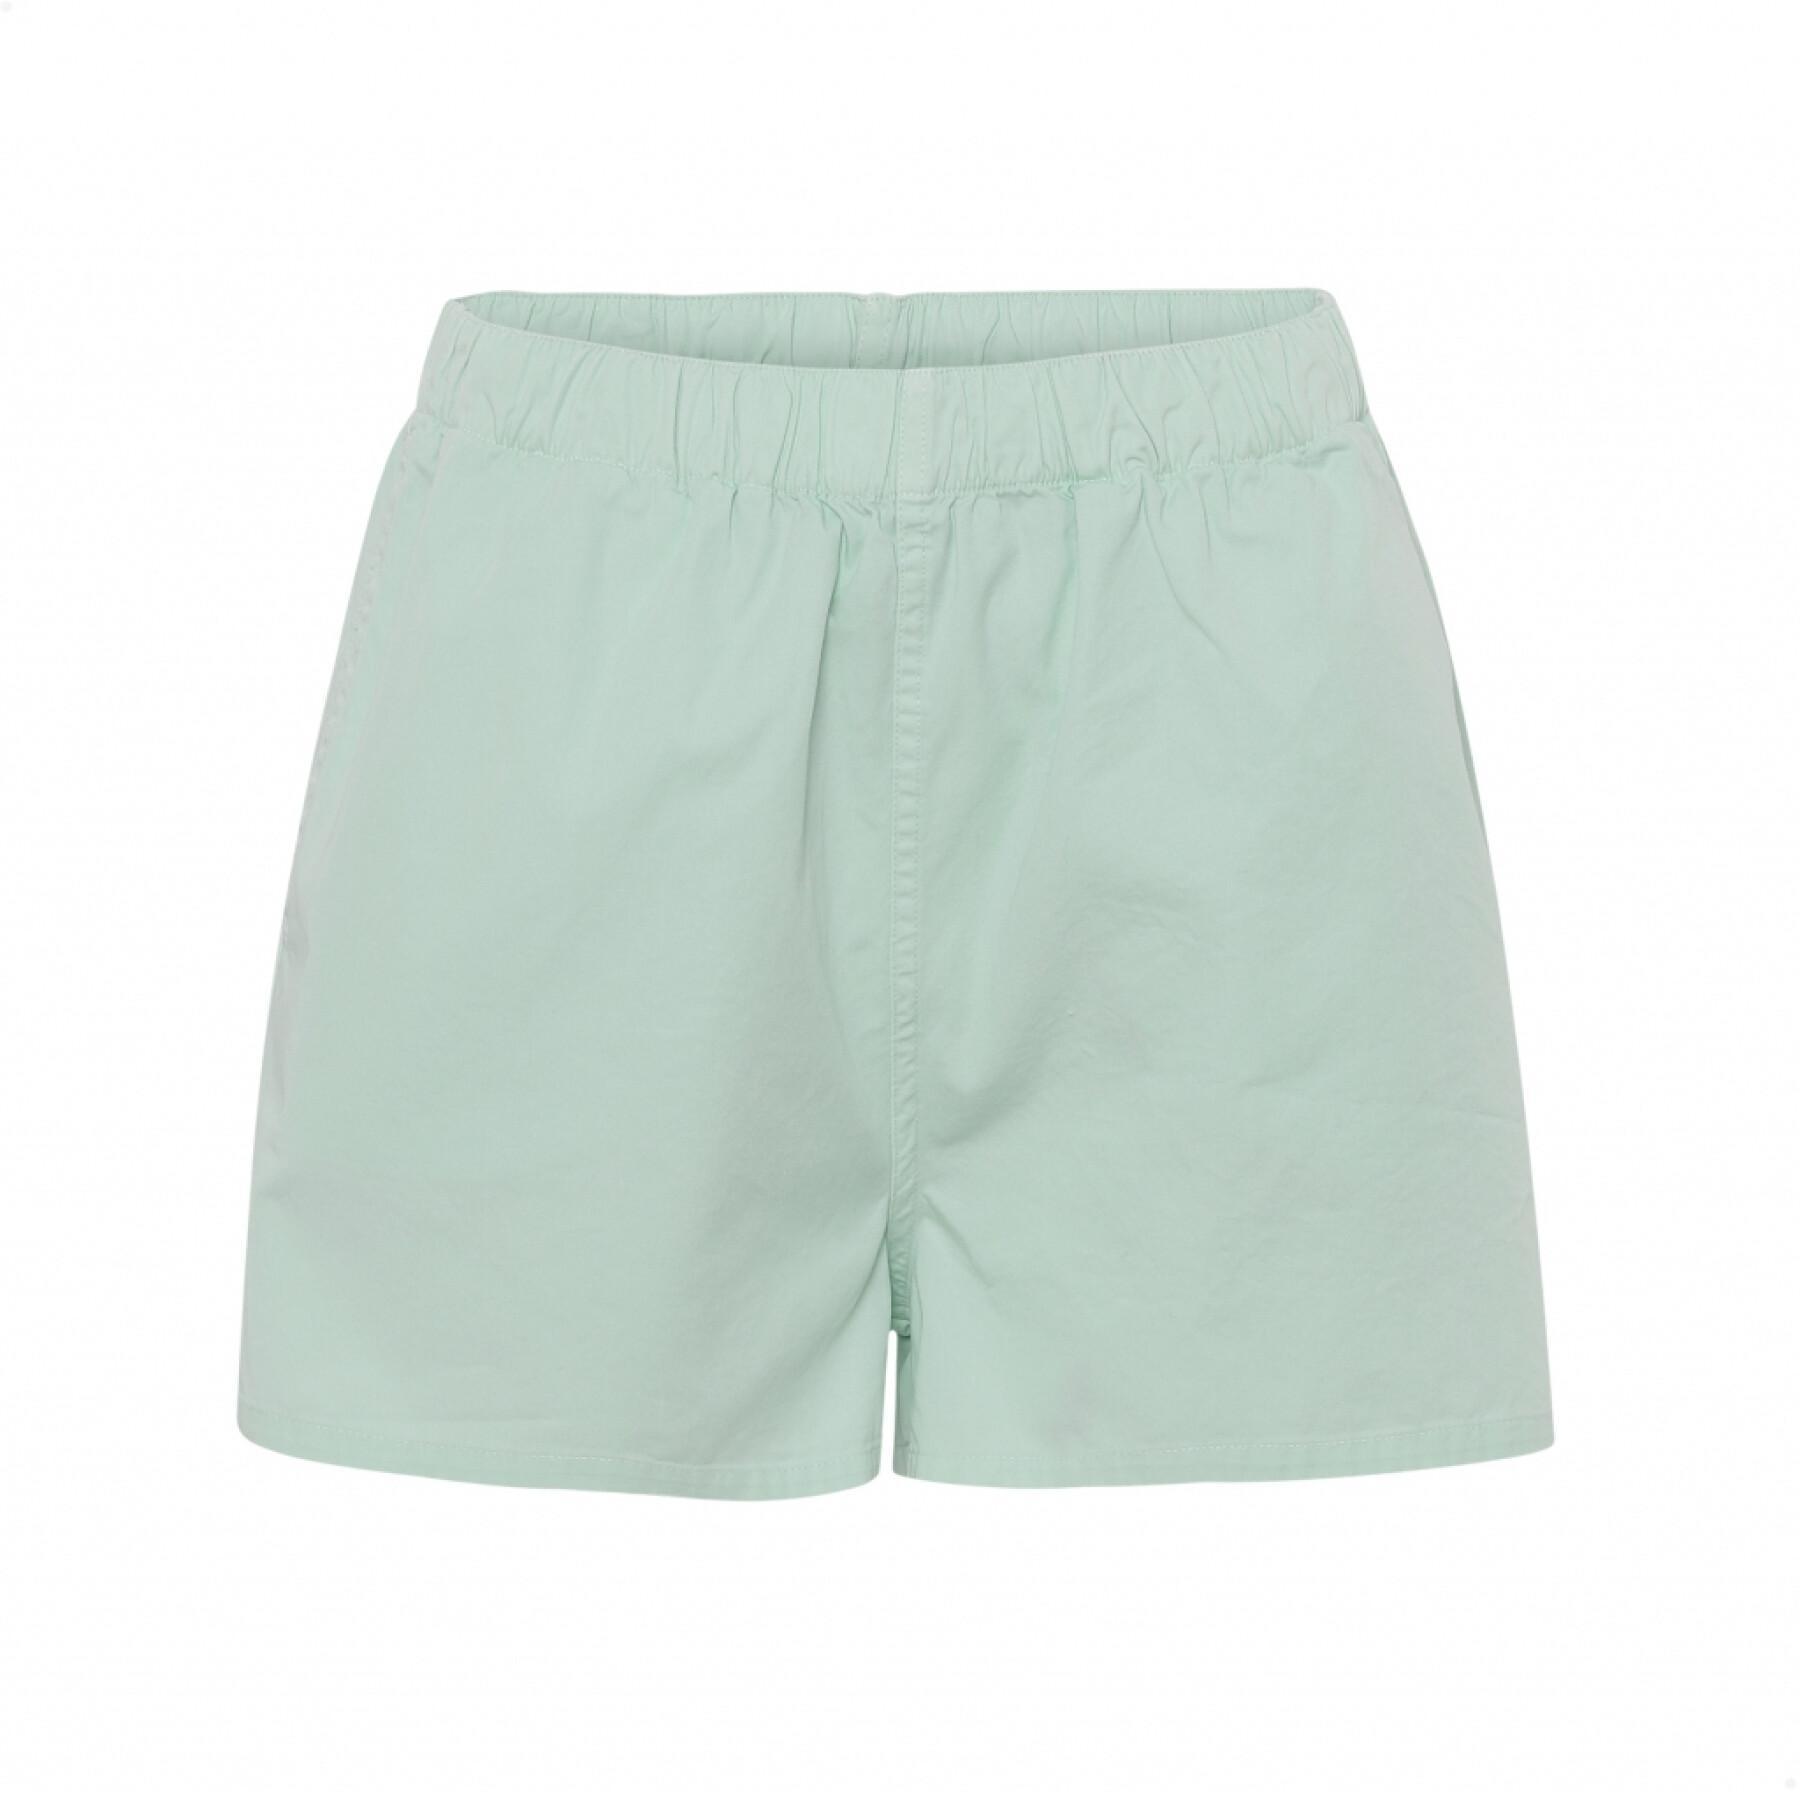 Women's twill shorts Colorful Standard Organic light aqua